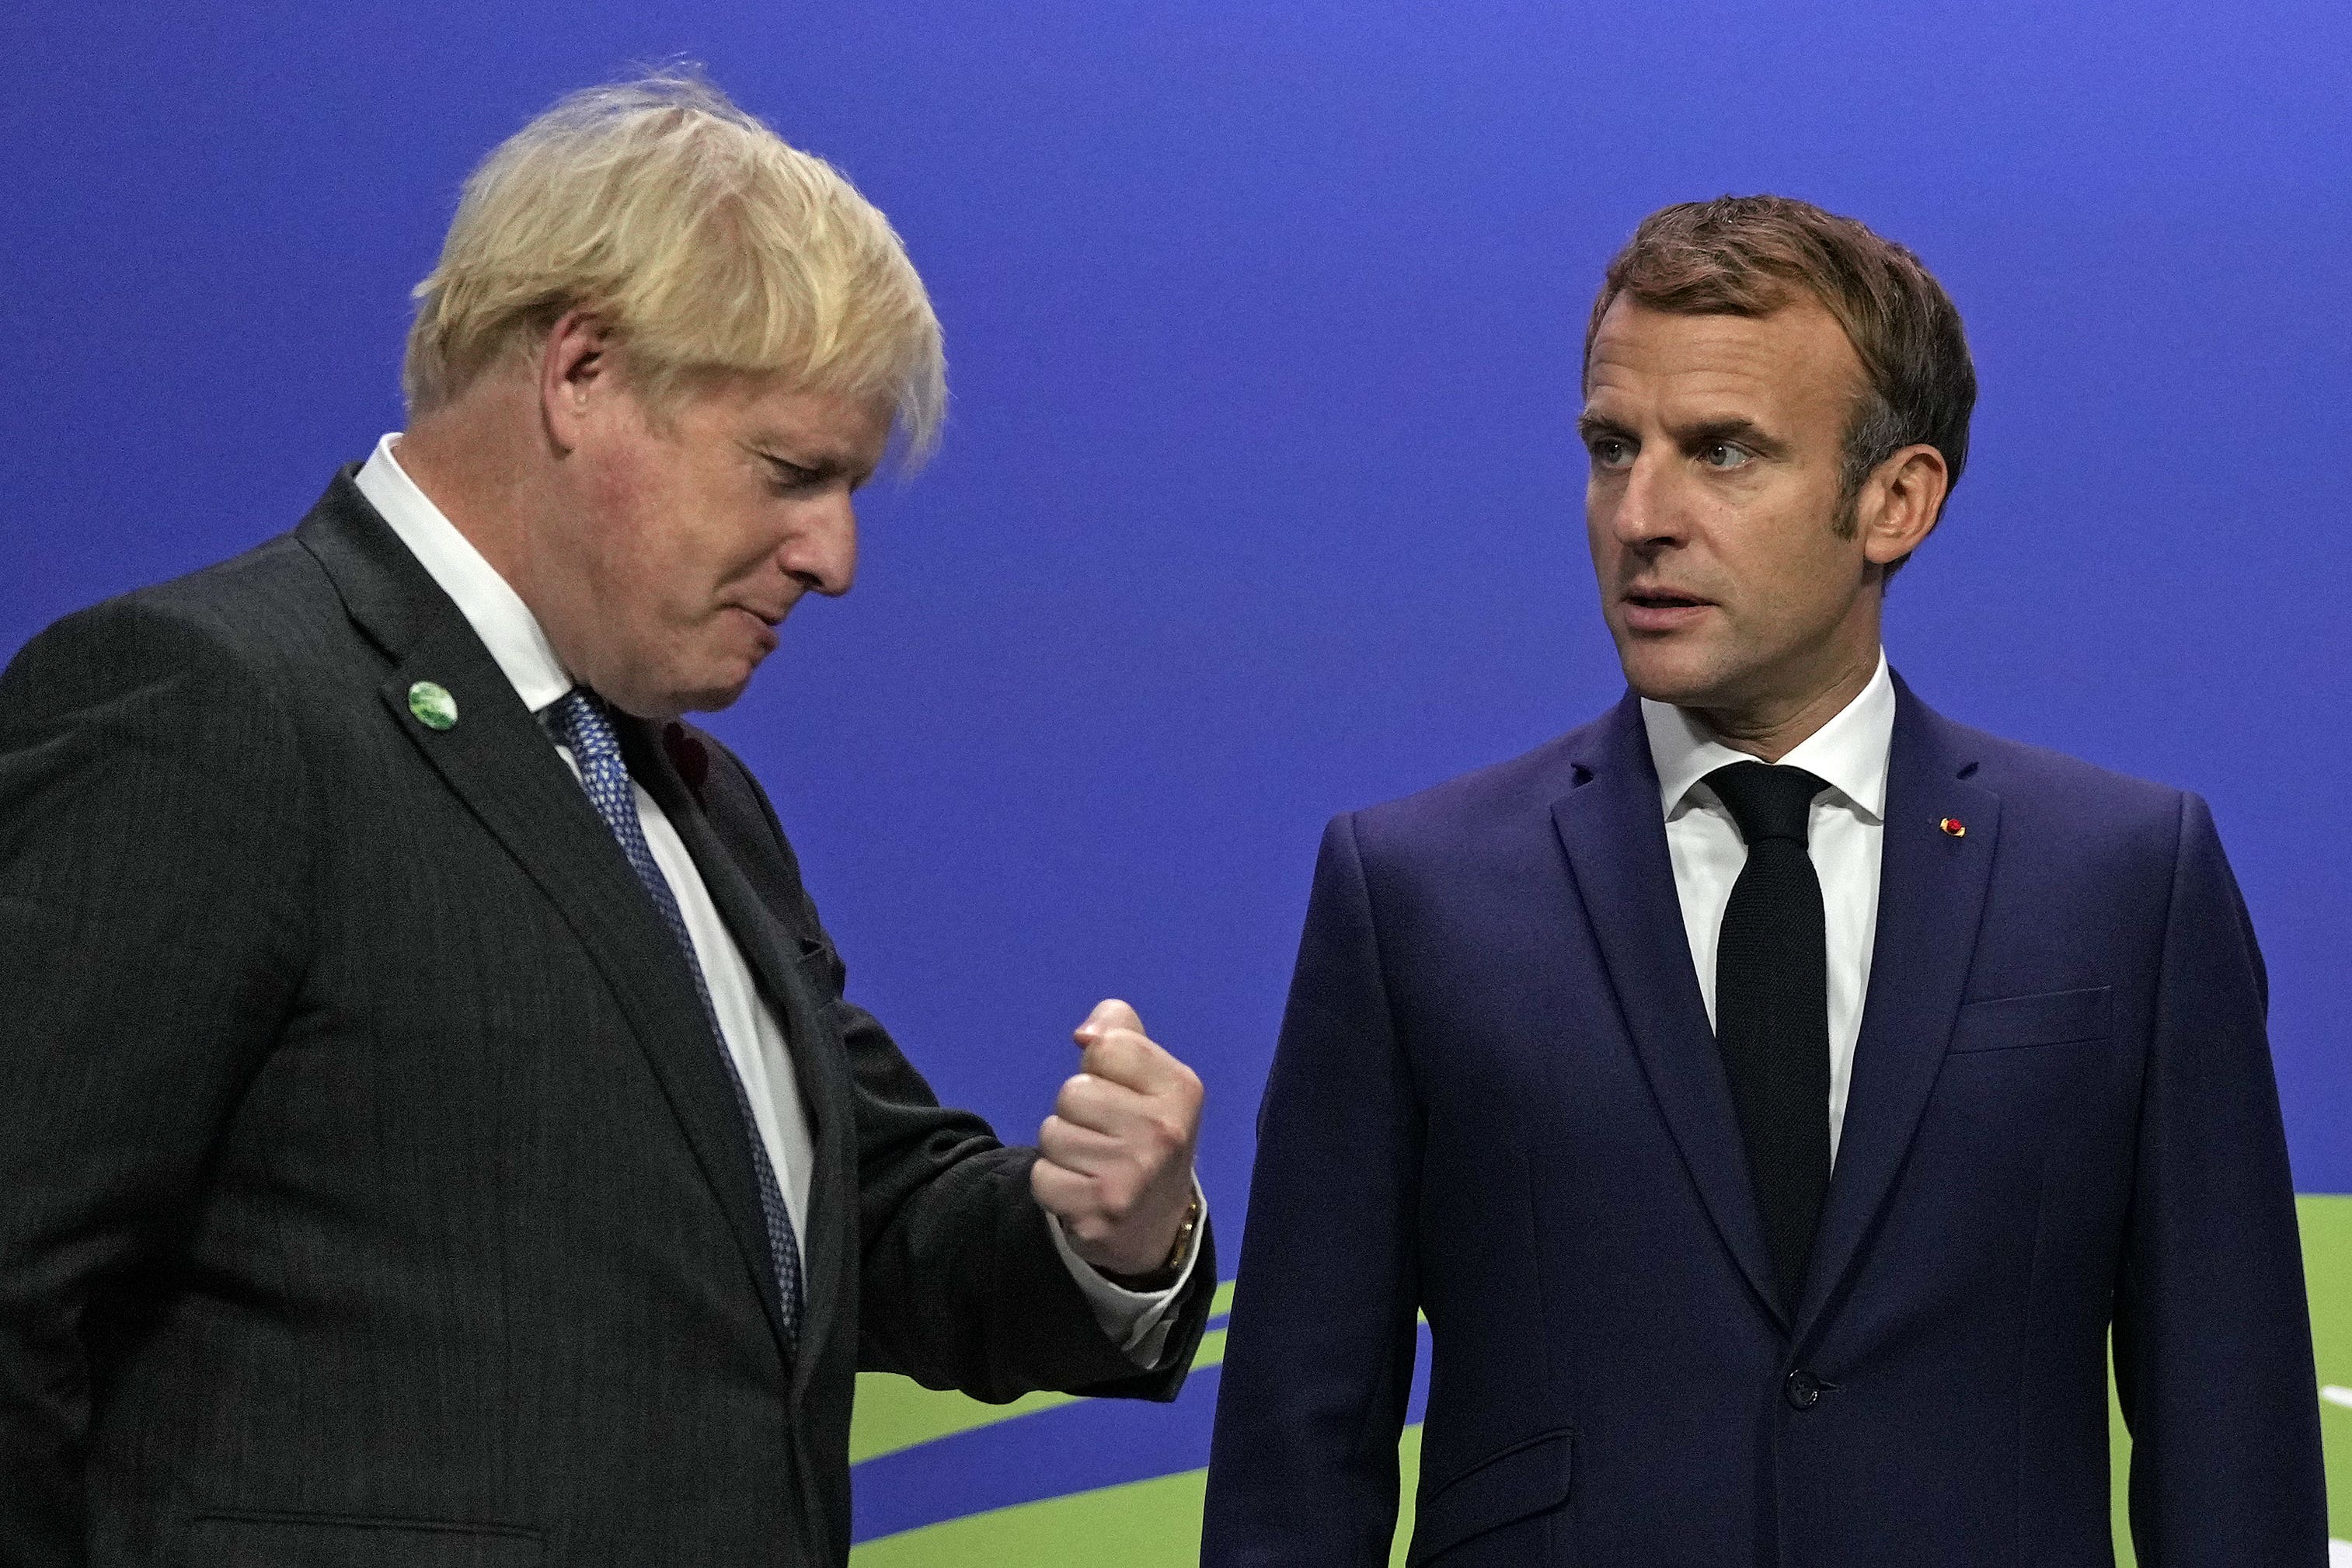 Boris Johnson was not happy about Emmanuel Macron’s criticism of the UK’s response to the Ukraine refugee crisis